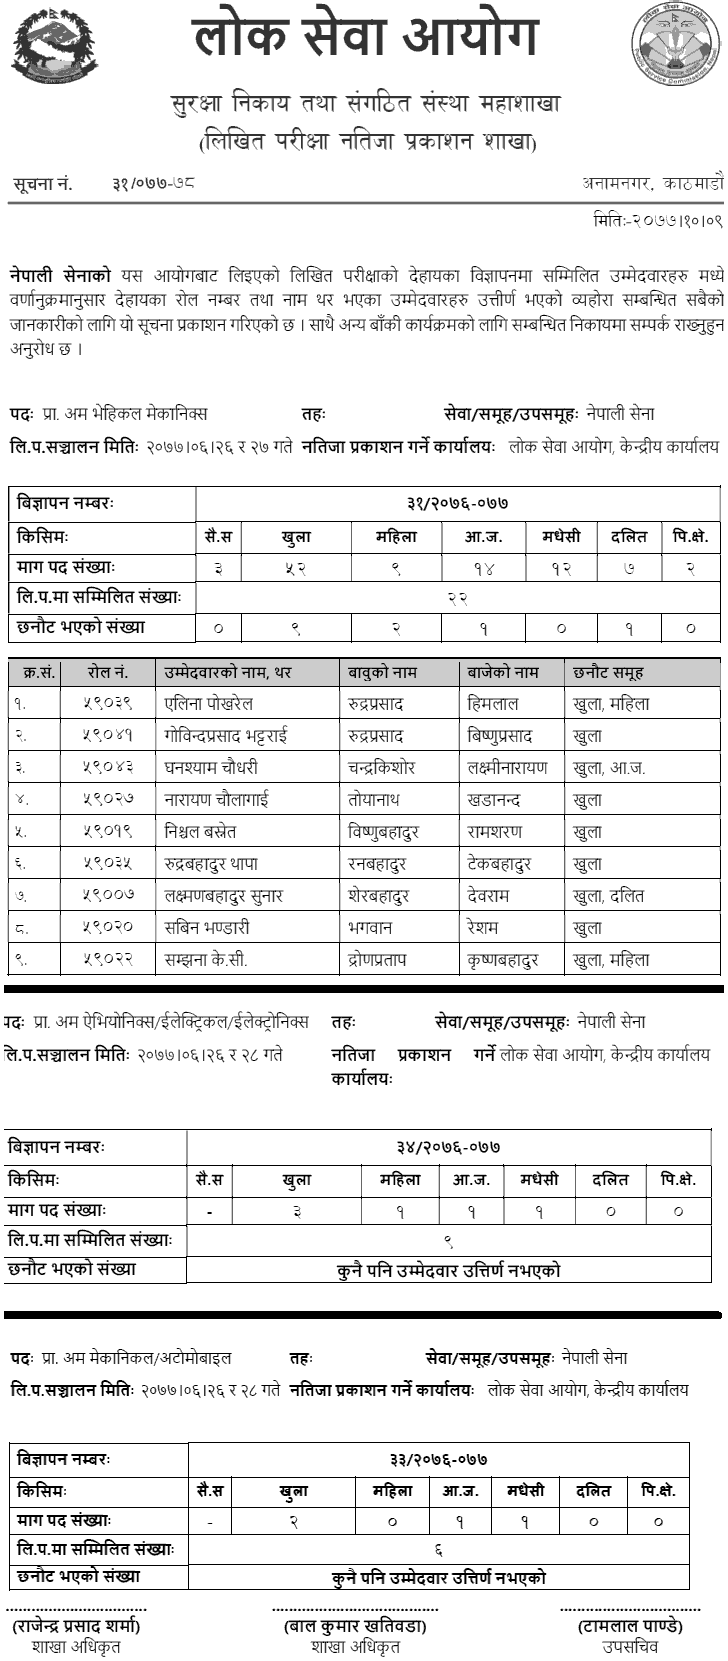 Nepal Army Prabidhik Amaldar Vehicle Mechanics, Automobile and Electronics Written Exam Result